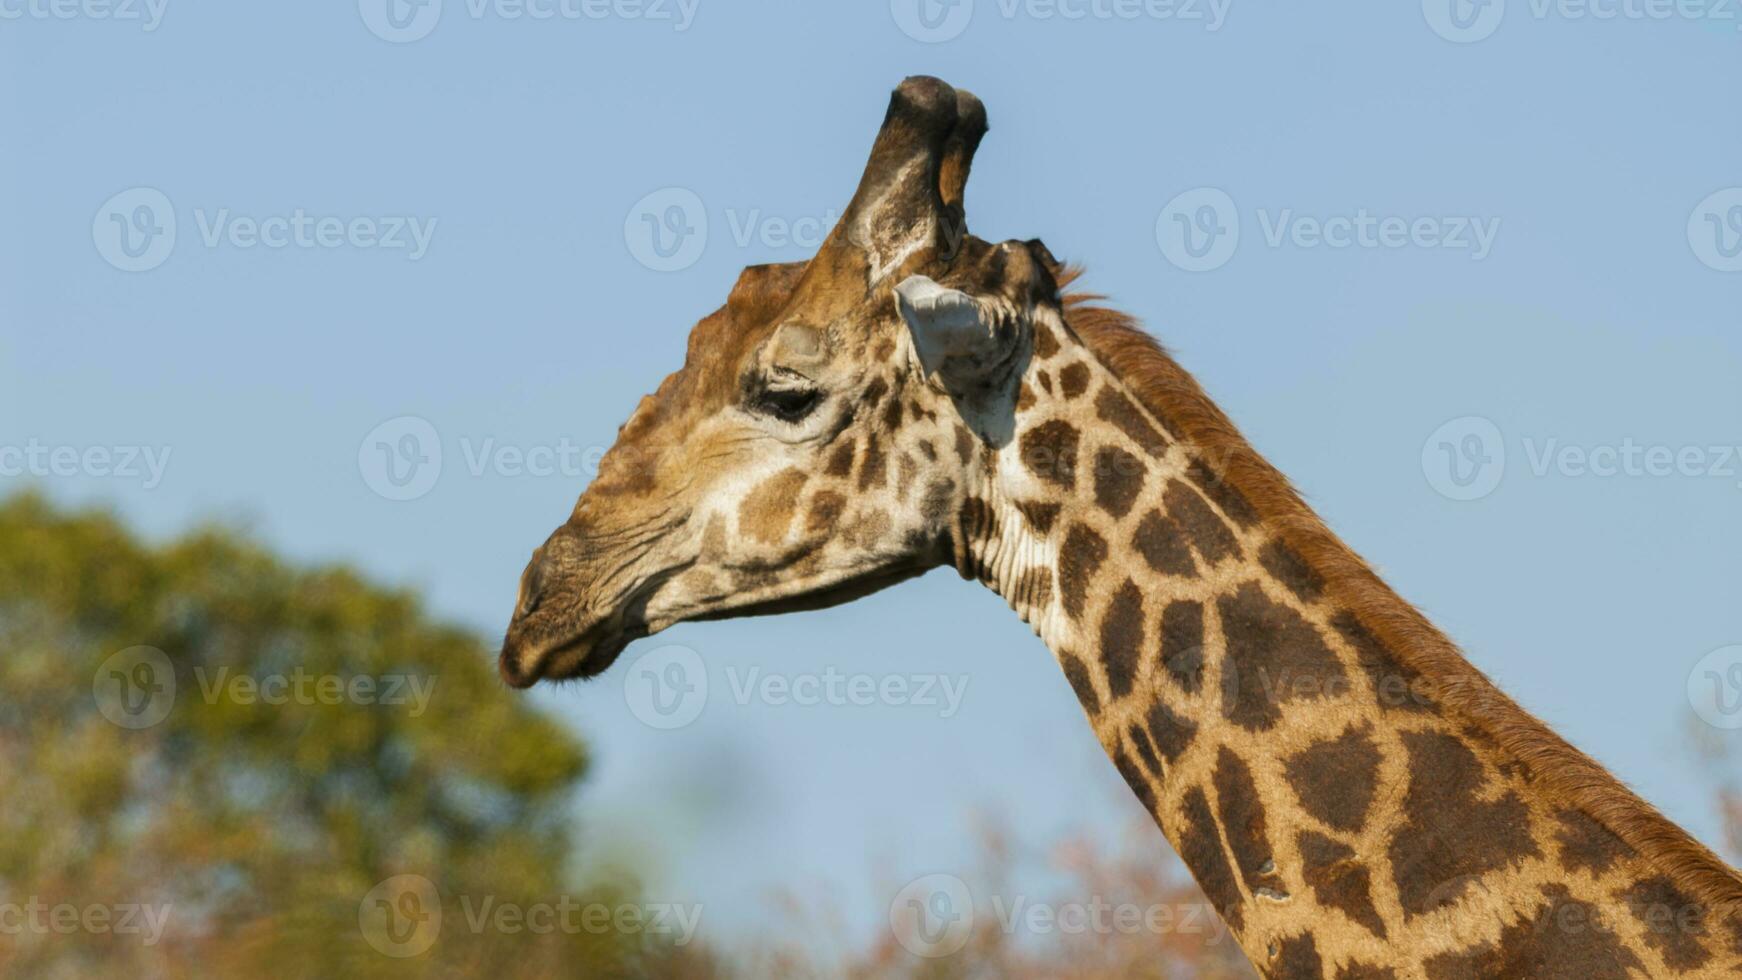 Giraffe Krüger National Park Süd Afrika. foto